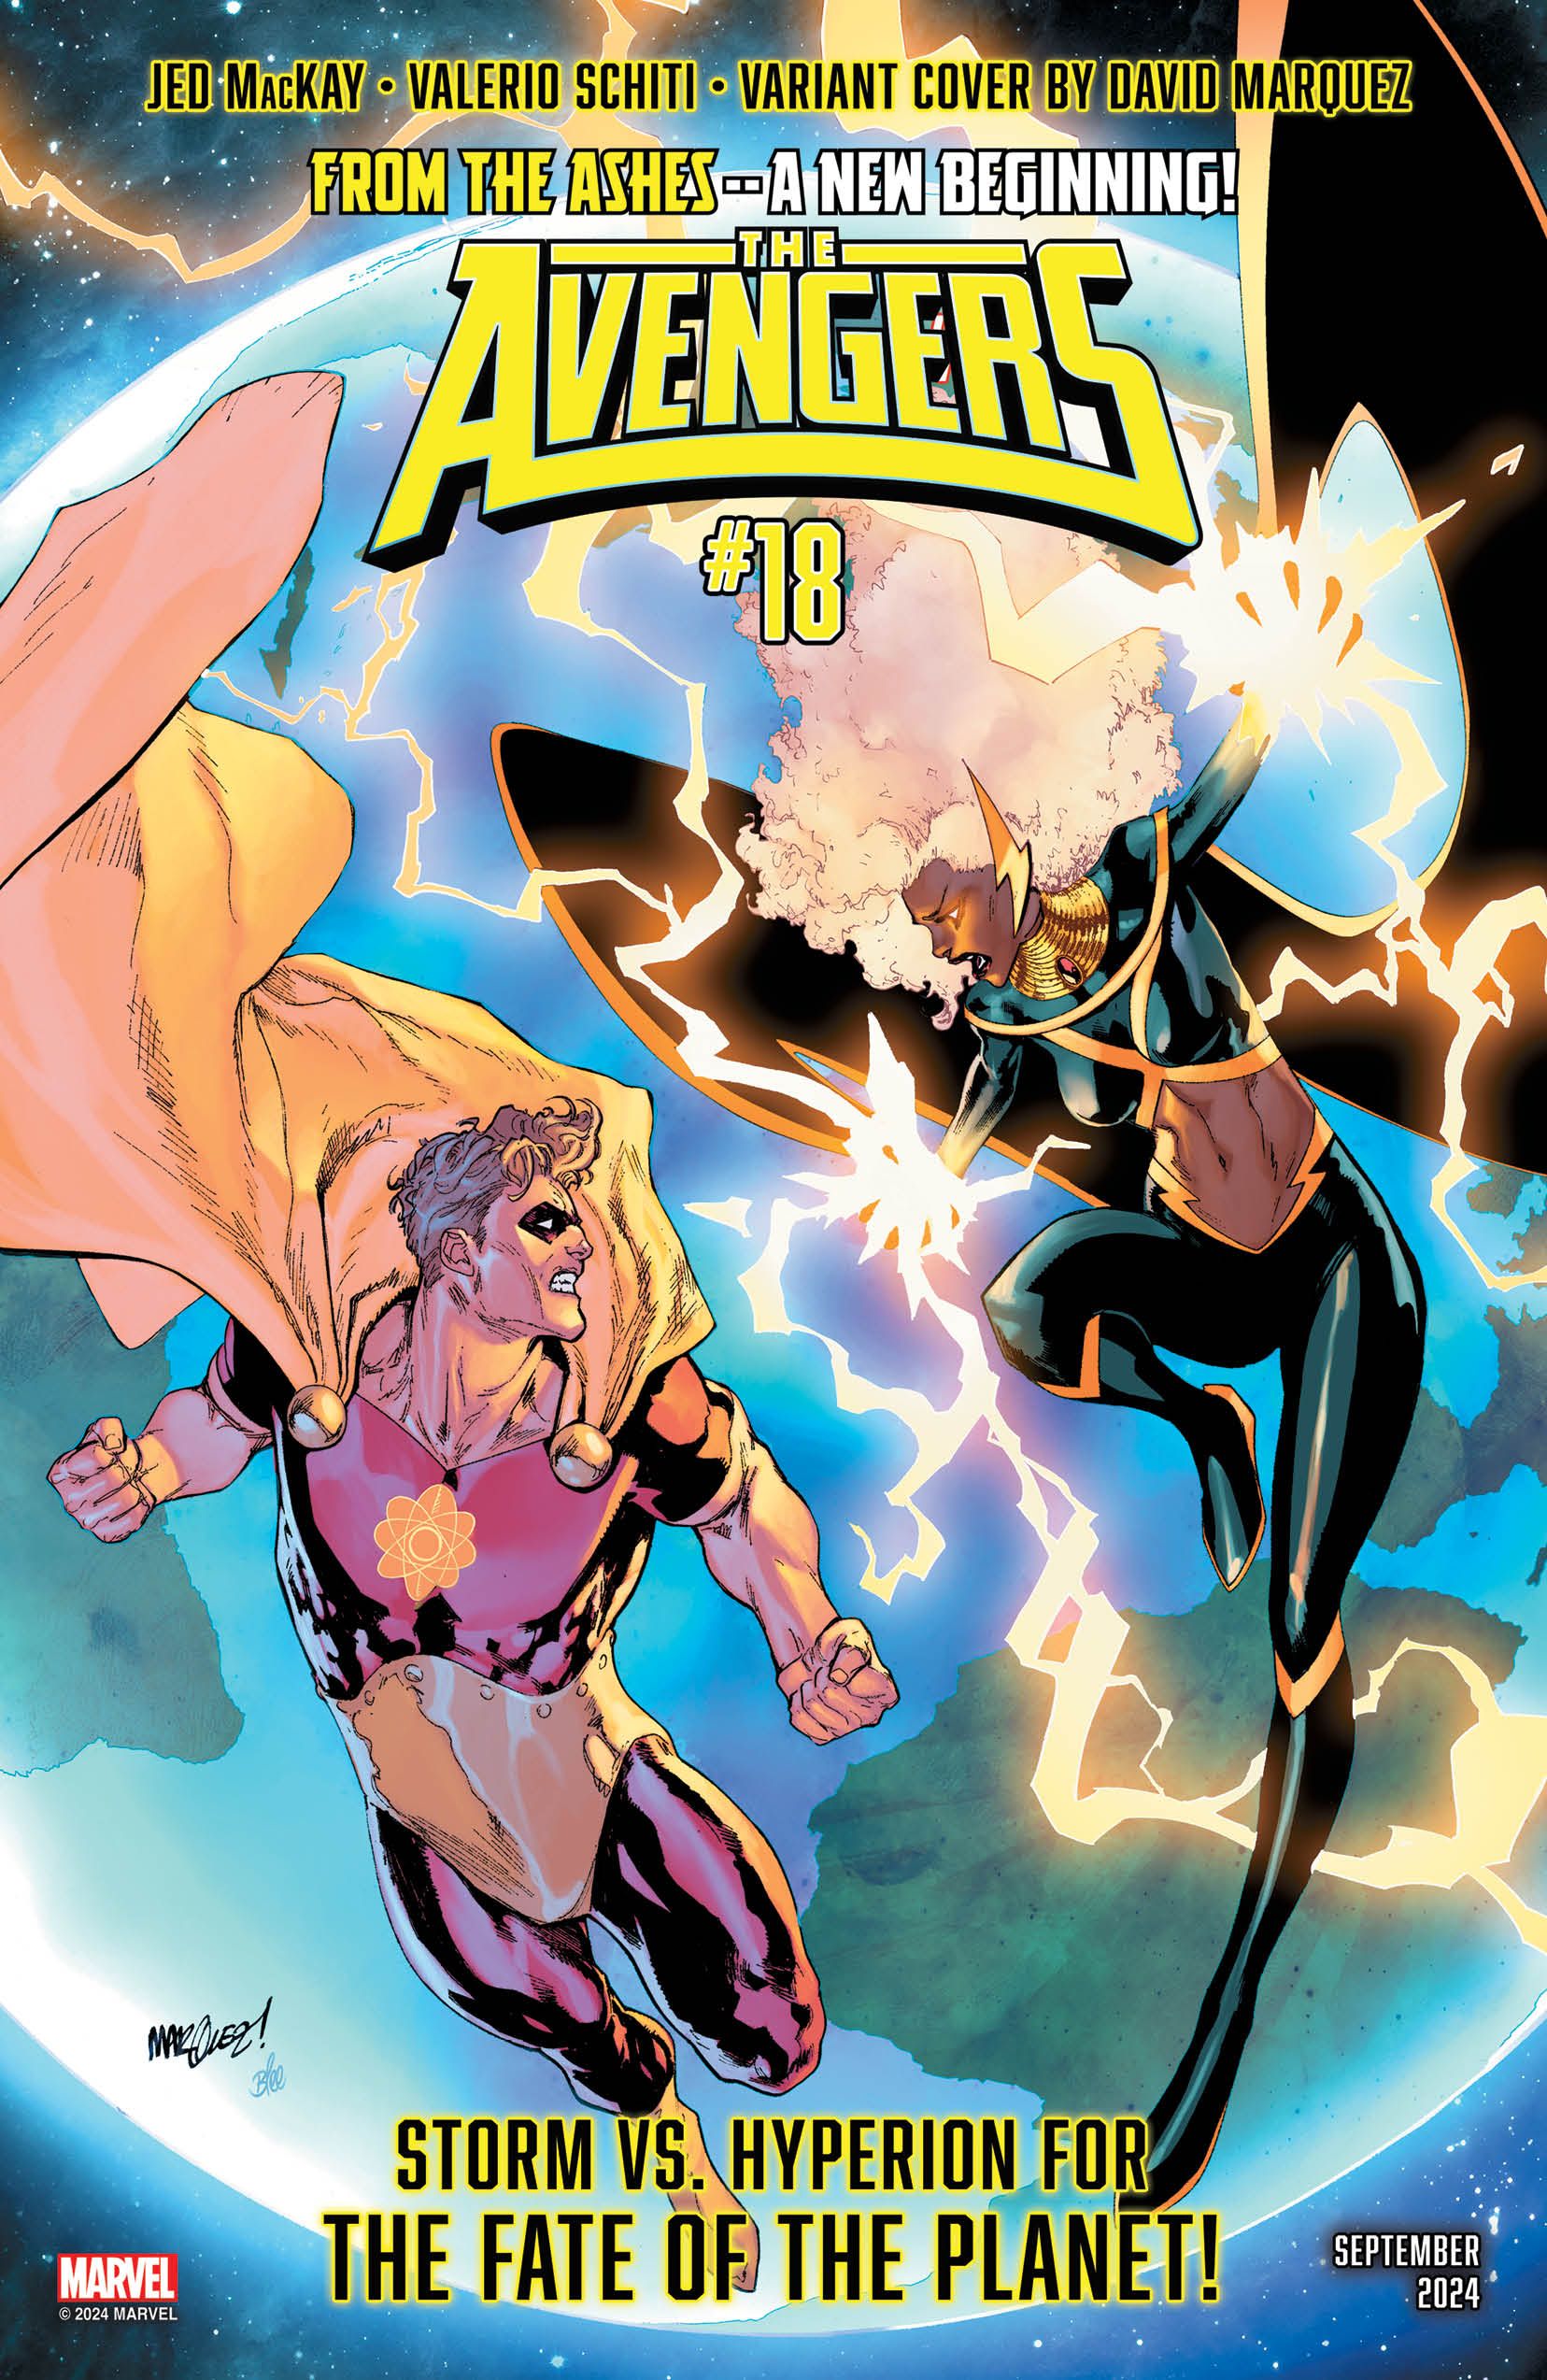 Capa variante de David Marquez para Vingadores (2023) #18 